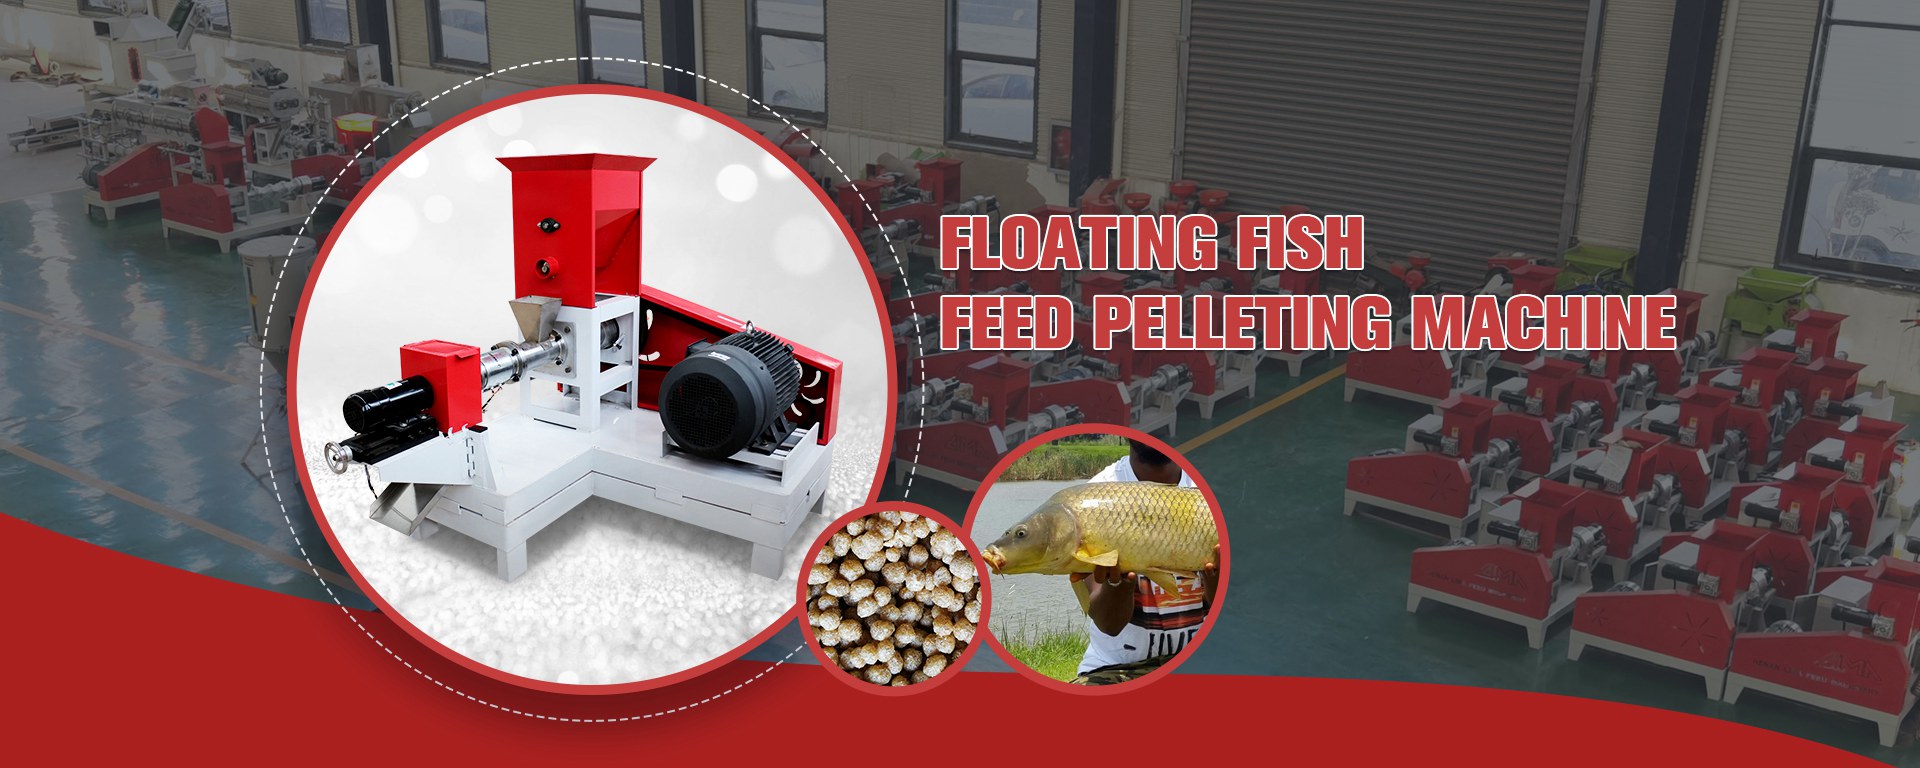 Floating fish feed pelleting machine